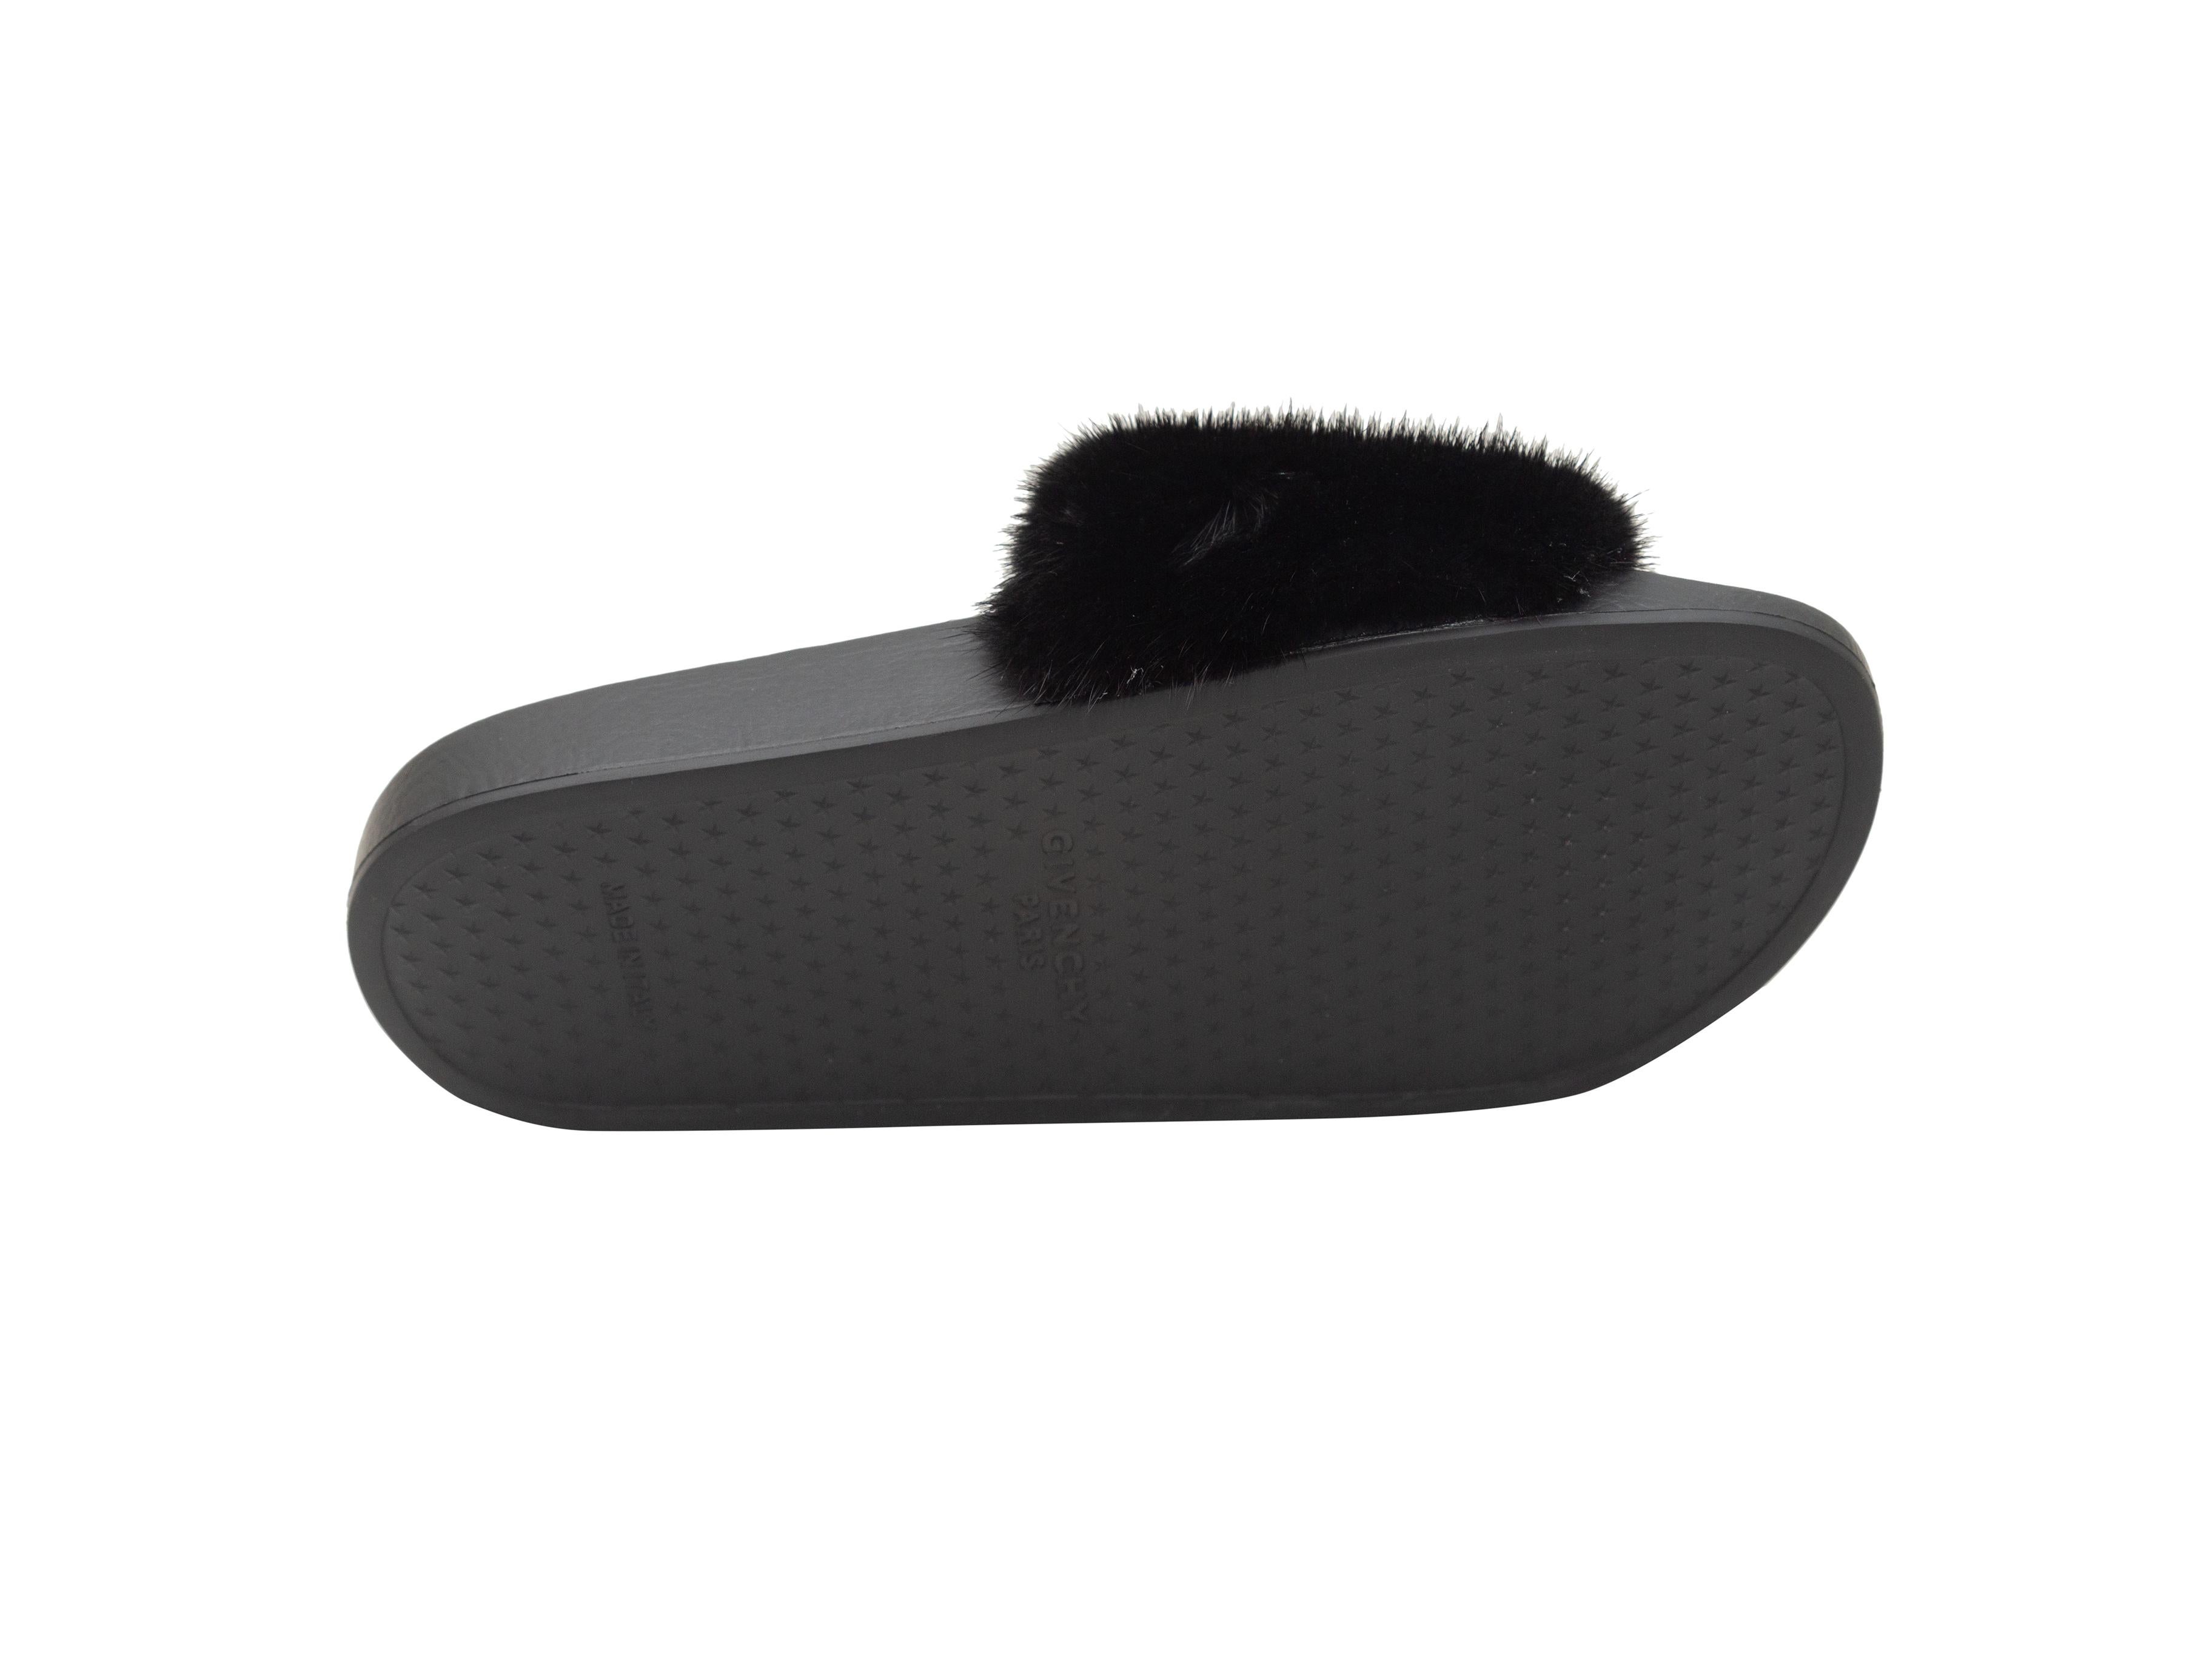 Product details: Black fur and rubber slide sandals by Givenchy. Designer size 37. 1